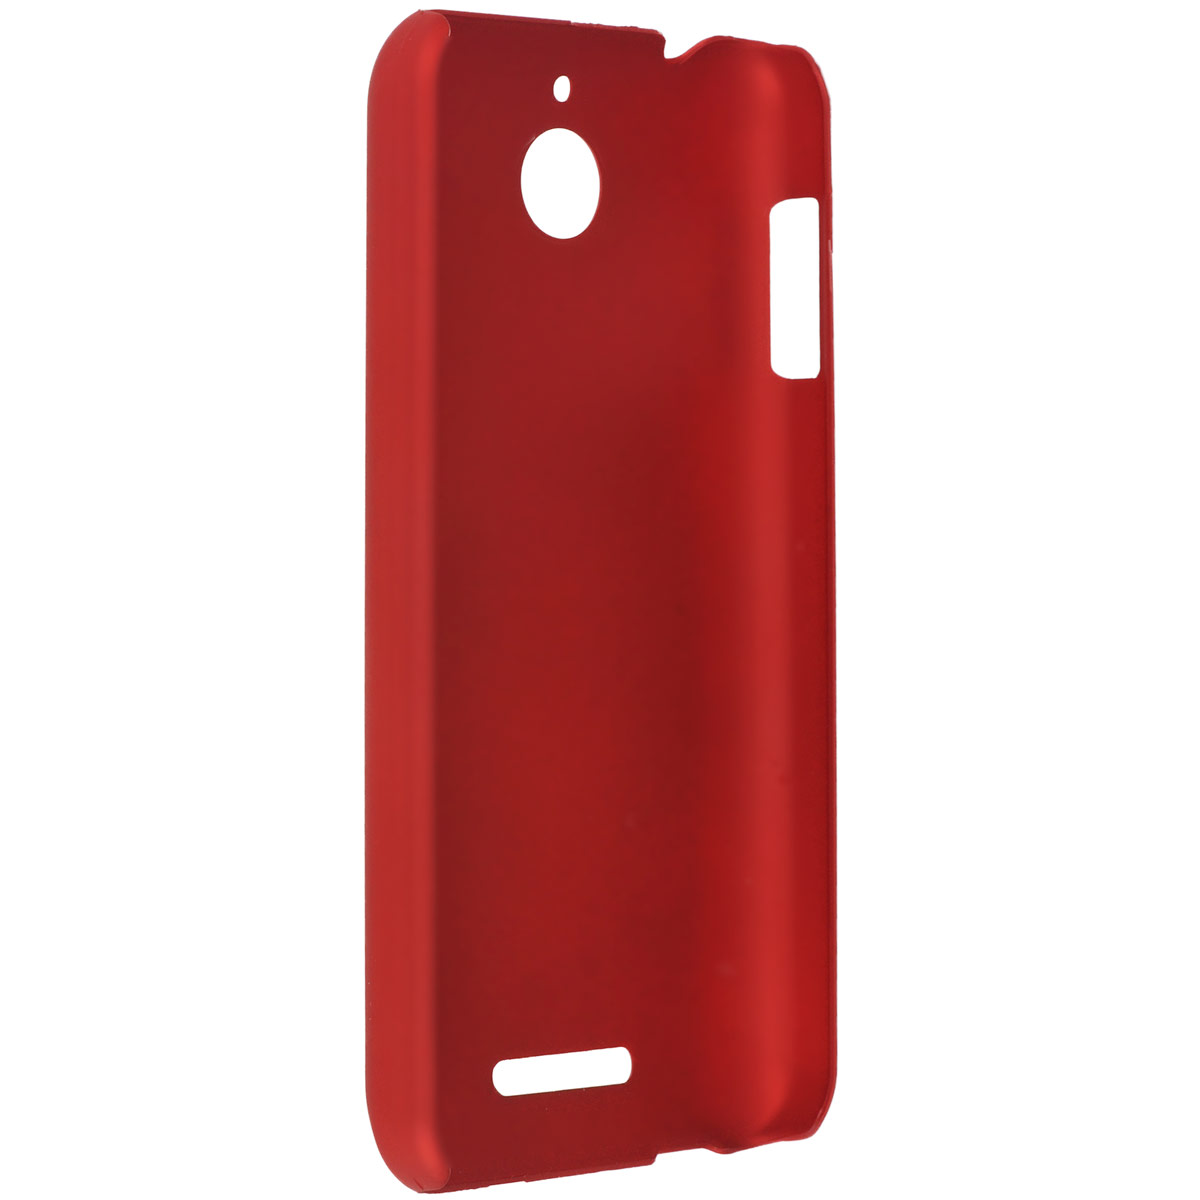 Skinbox Shield 4People   HTC Desire 510, Red